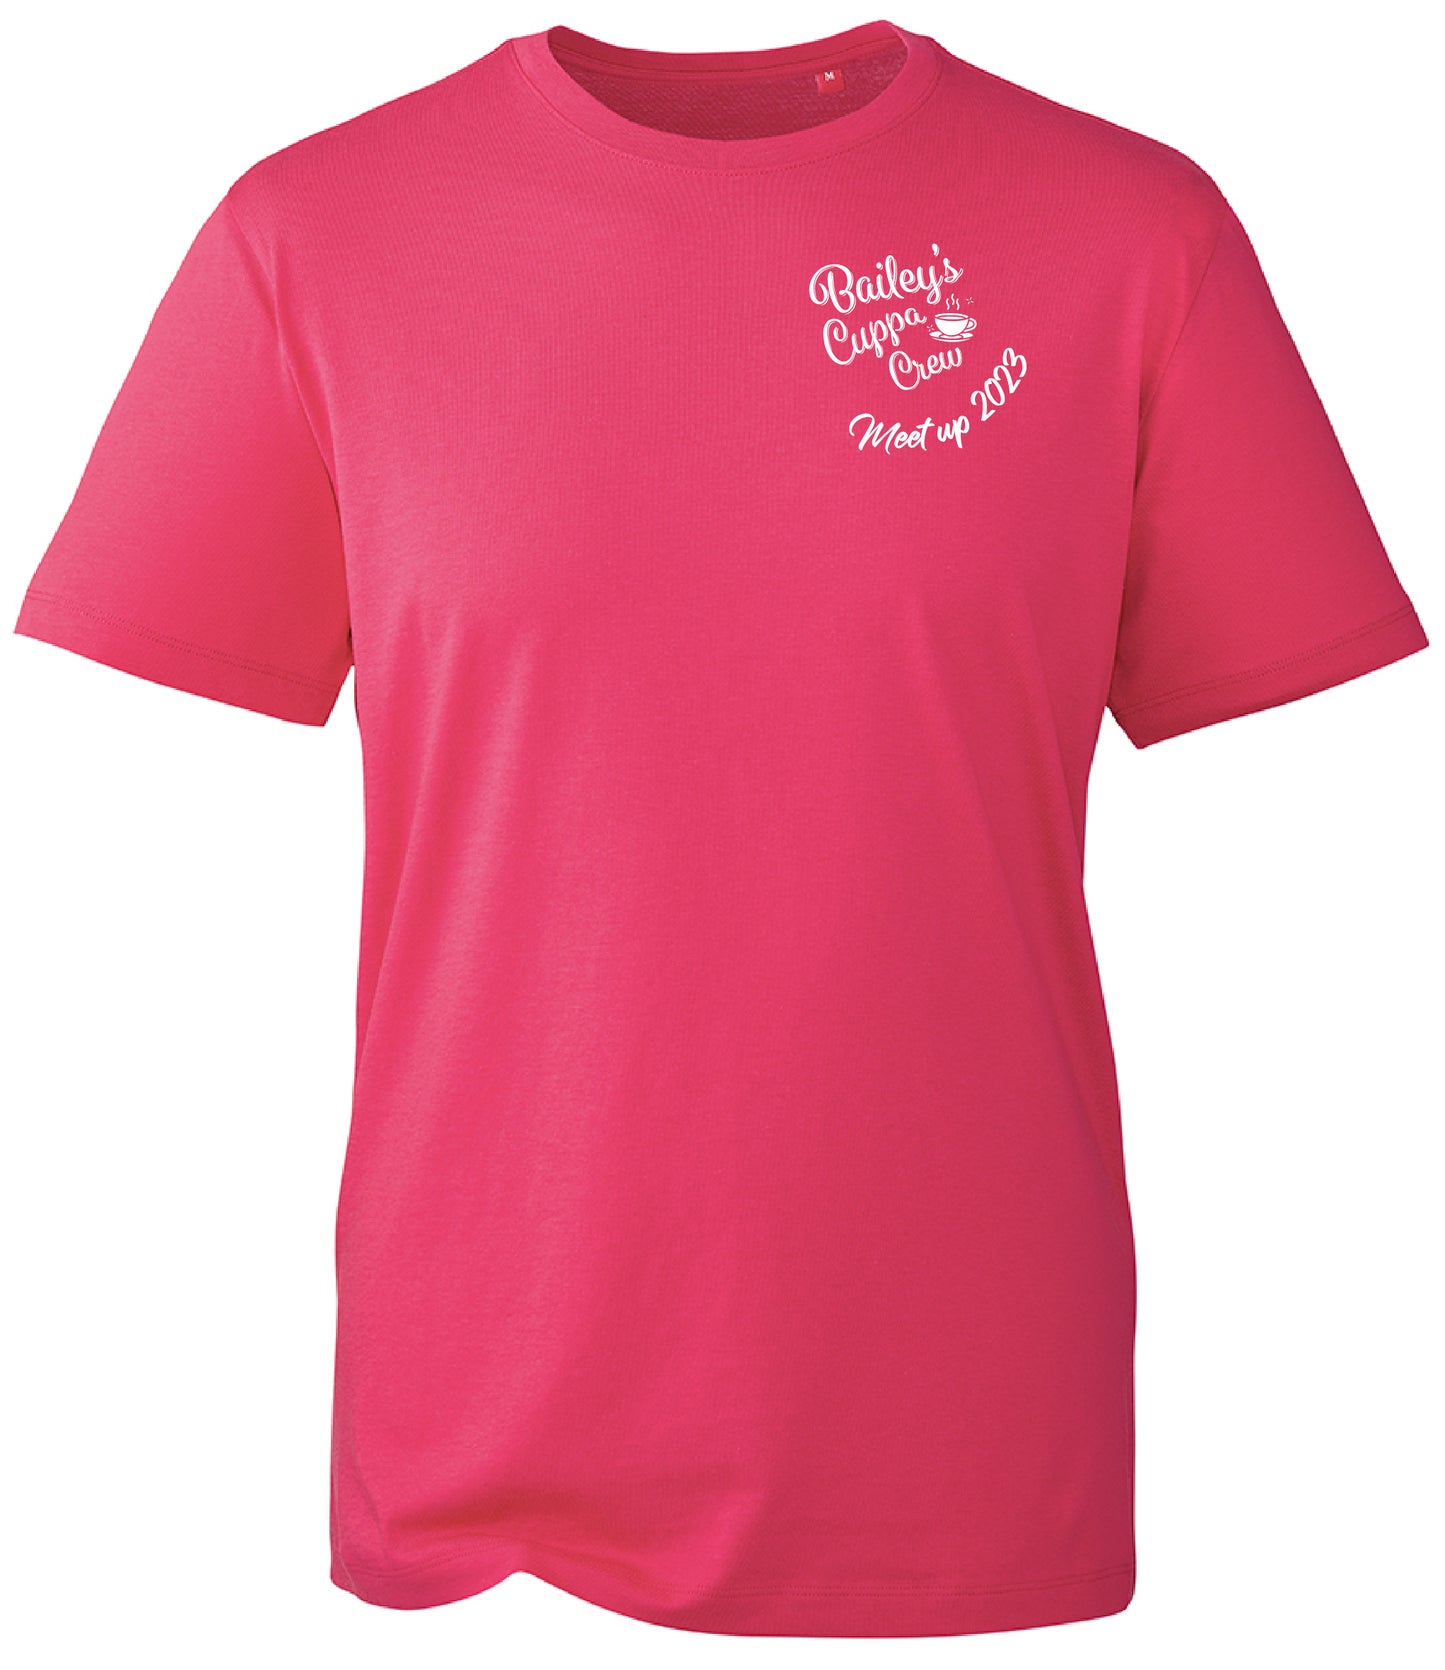 Bailey's Cuppa Crew Meet Up 2023 Chest Logo T-Shirt